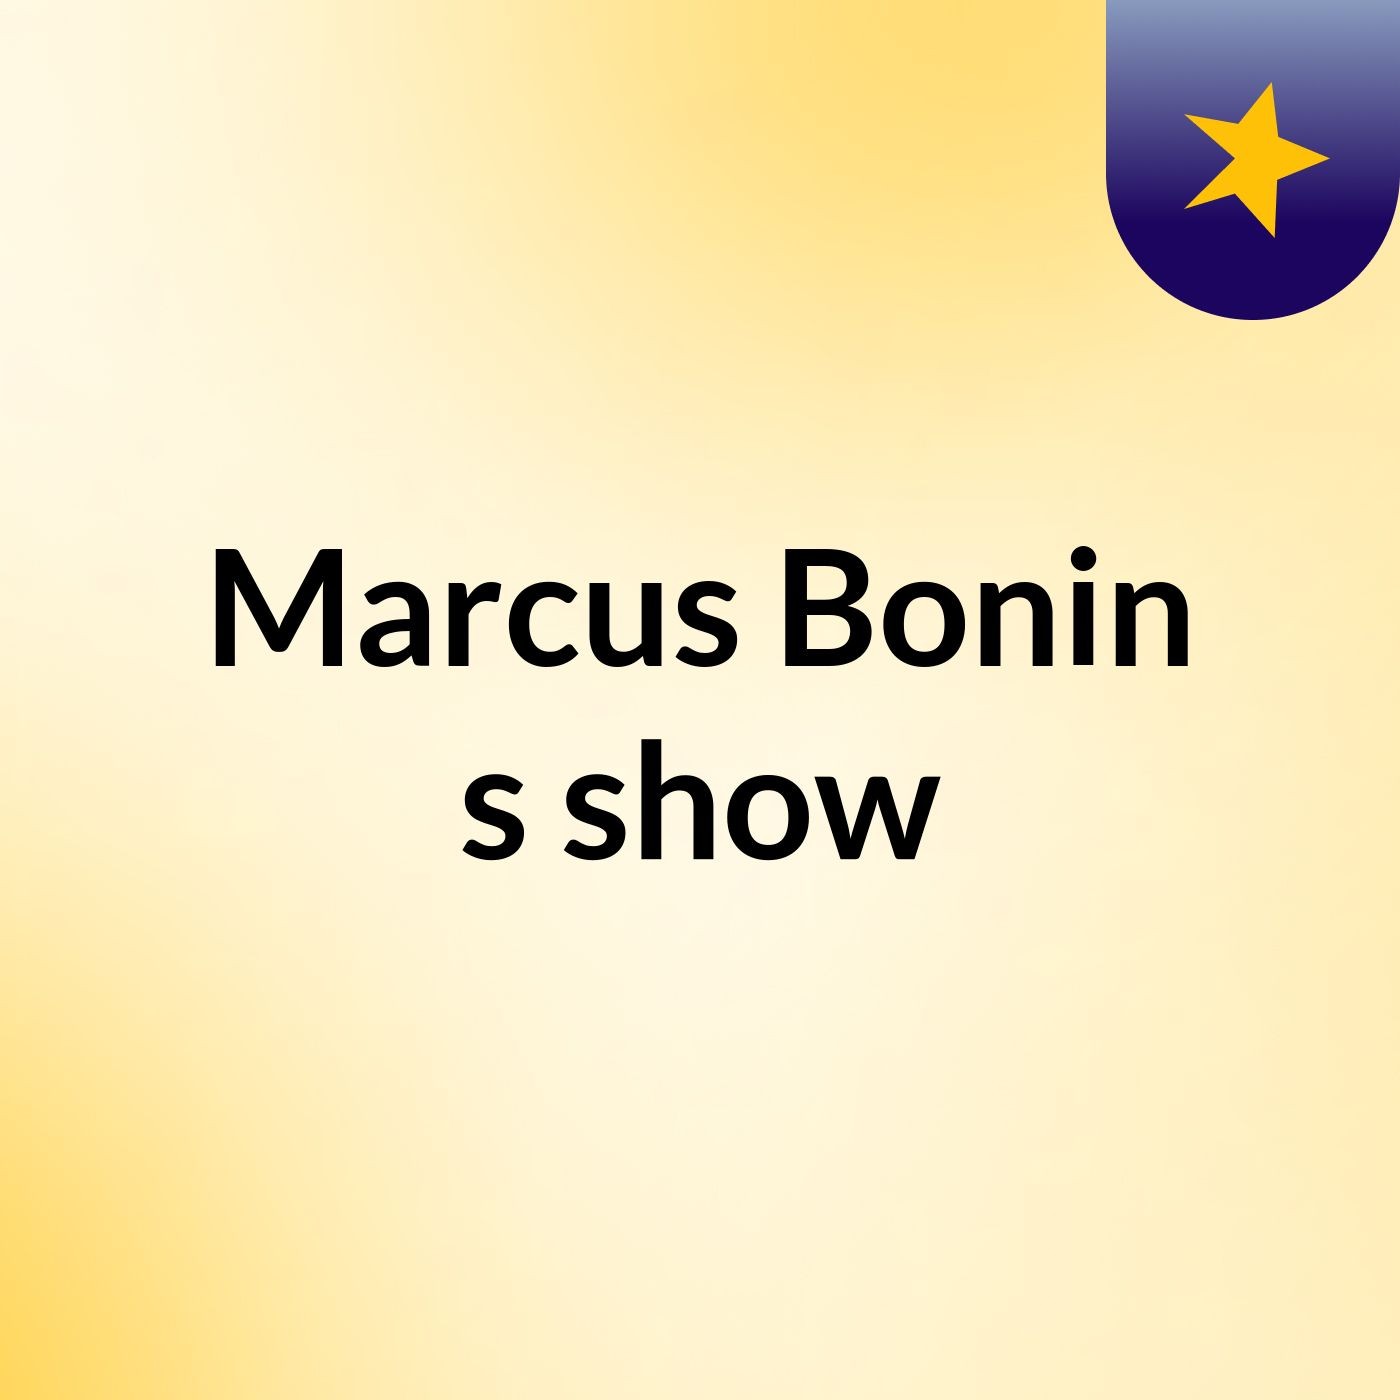 Marcus Bonin's show